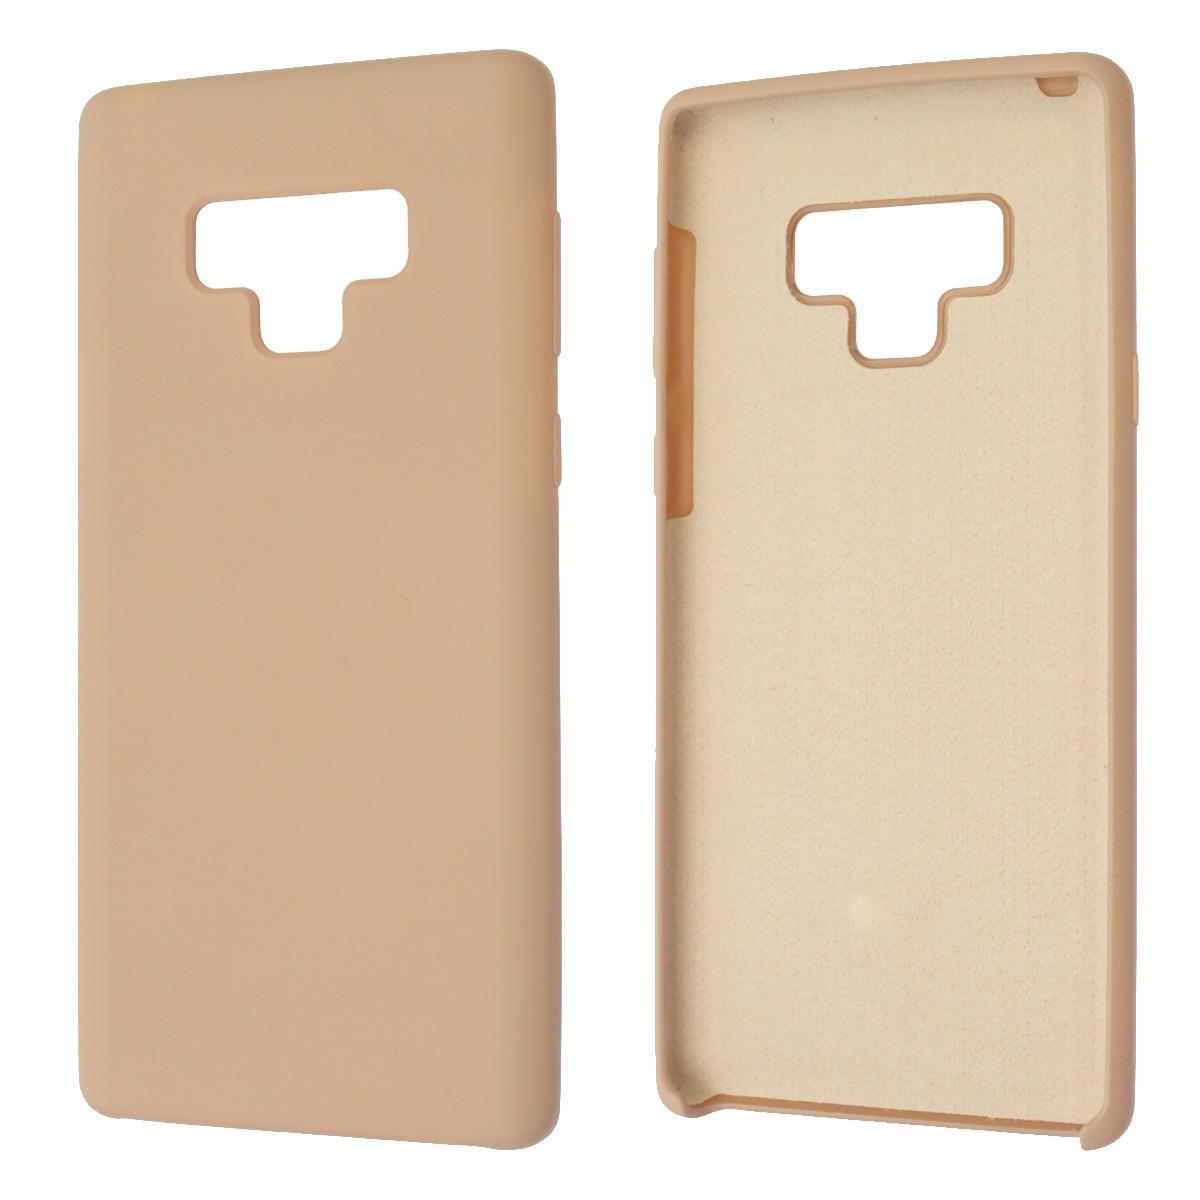 Чехол накладка Silicon Cover для SAMSUNG Galaxy Note 9, силикон, бархат, цвет бежевый